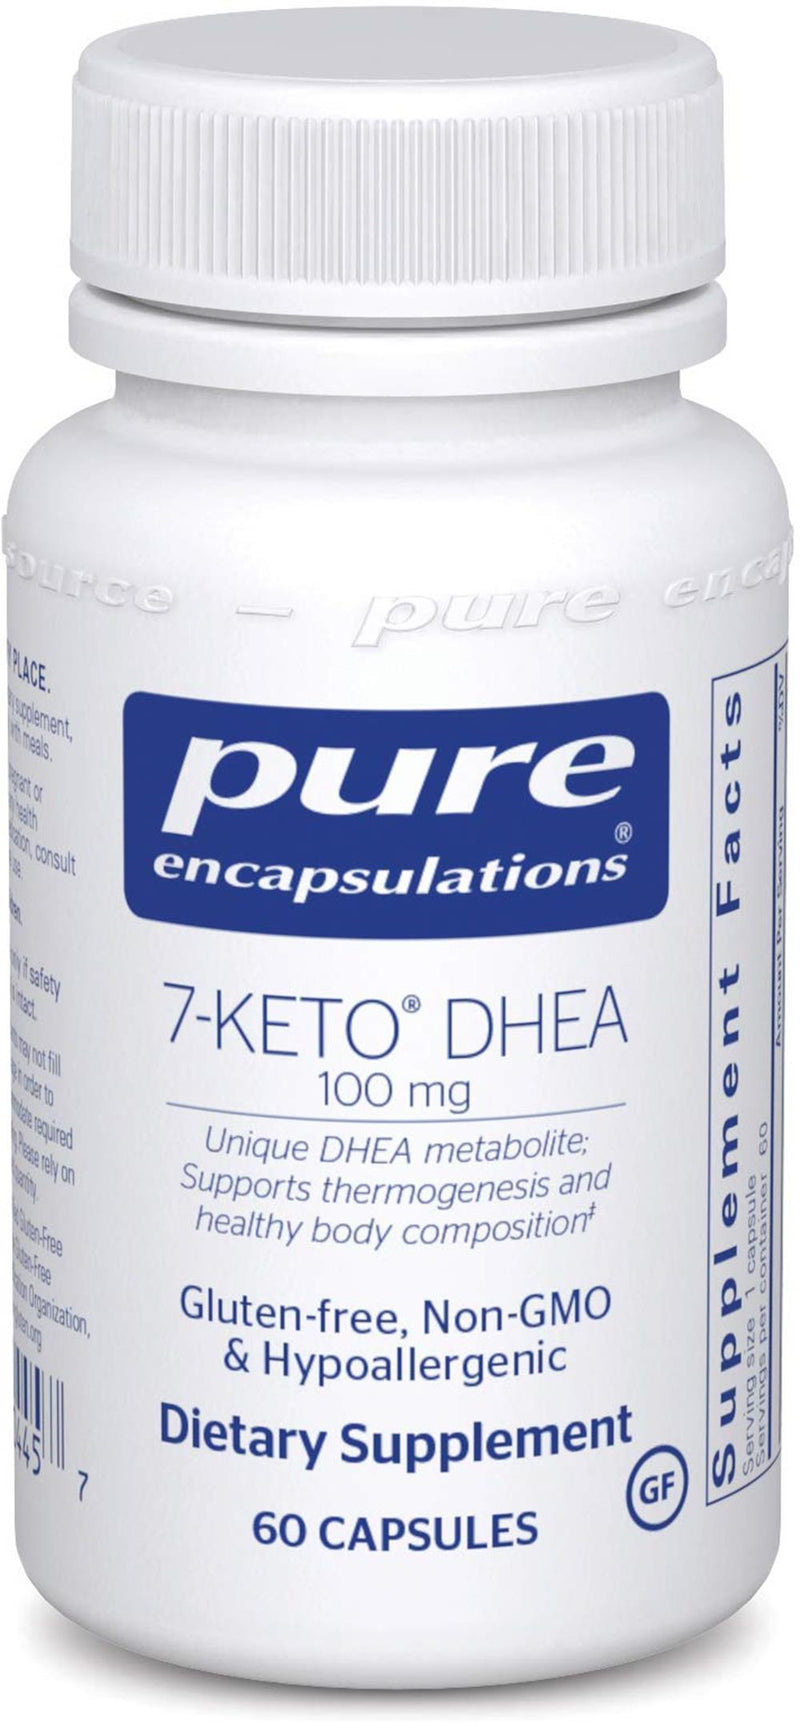 Pure Encapsulations 7-KETO DHEA 100 mg -- 60 Capsules